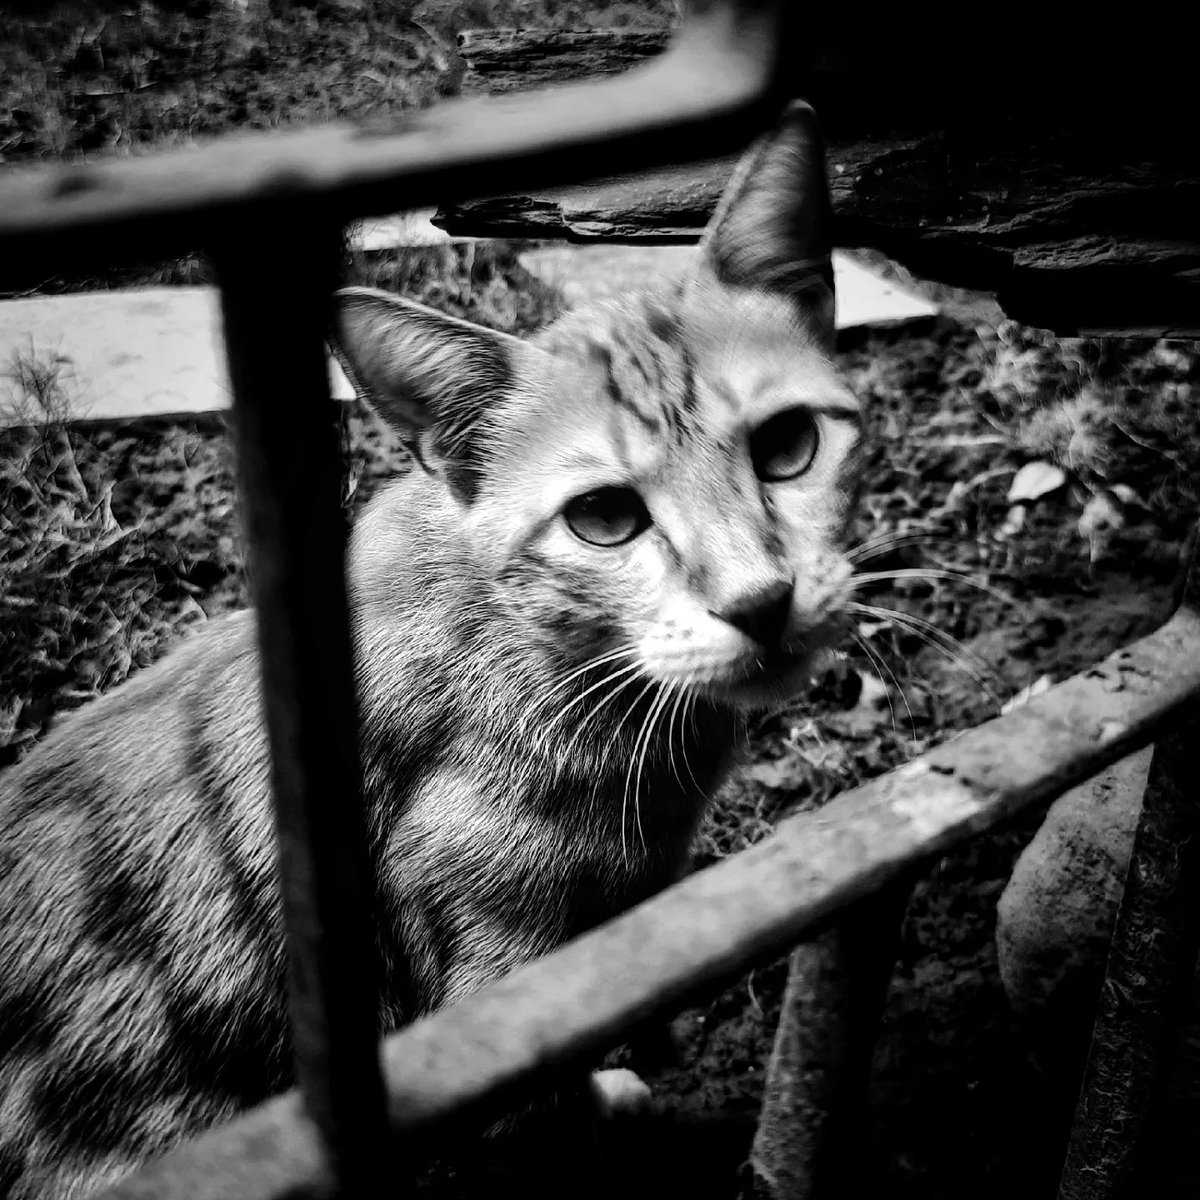 Kitty posing 😺
#cat #animal #catphotography #photography #photographer #mobilephotography #mobilephotographer